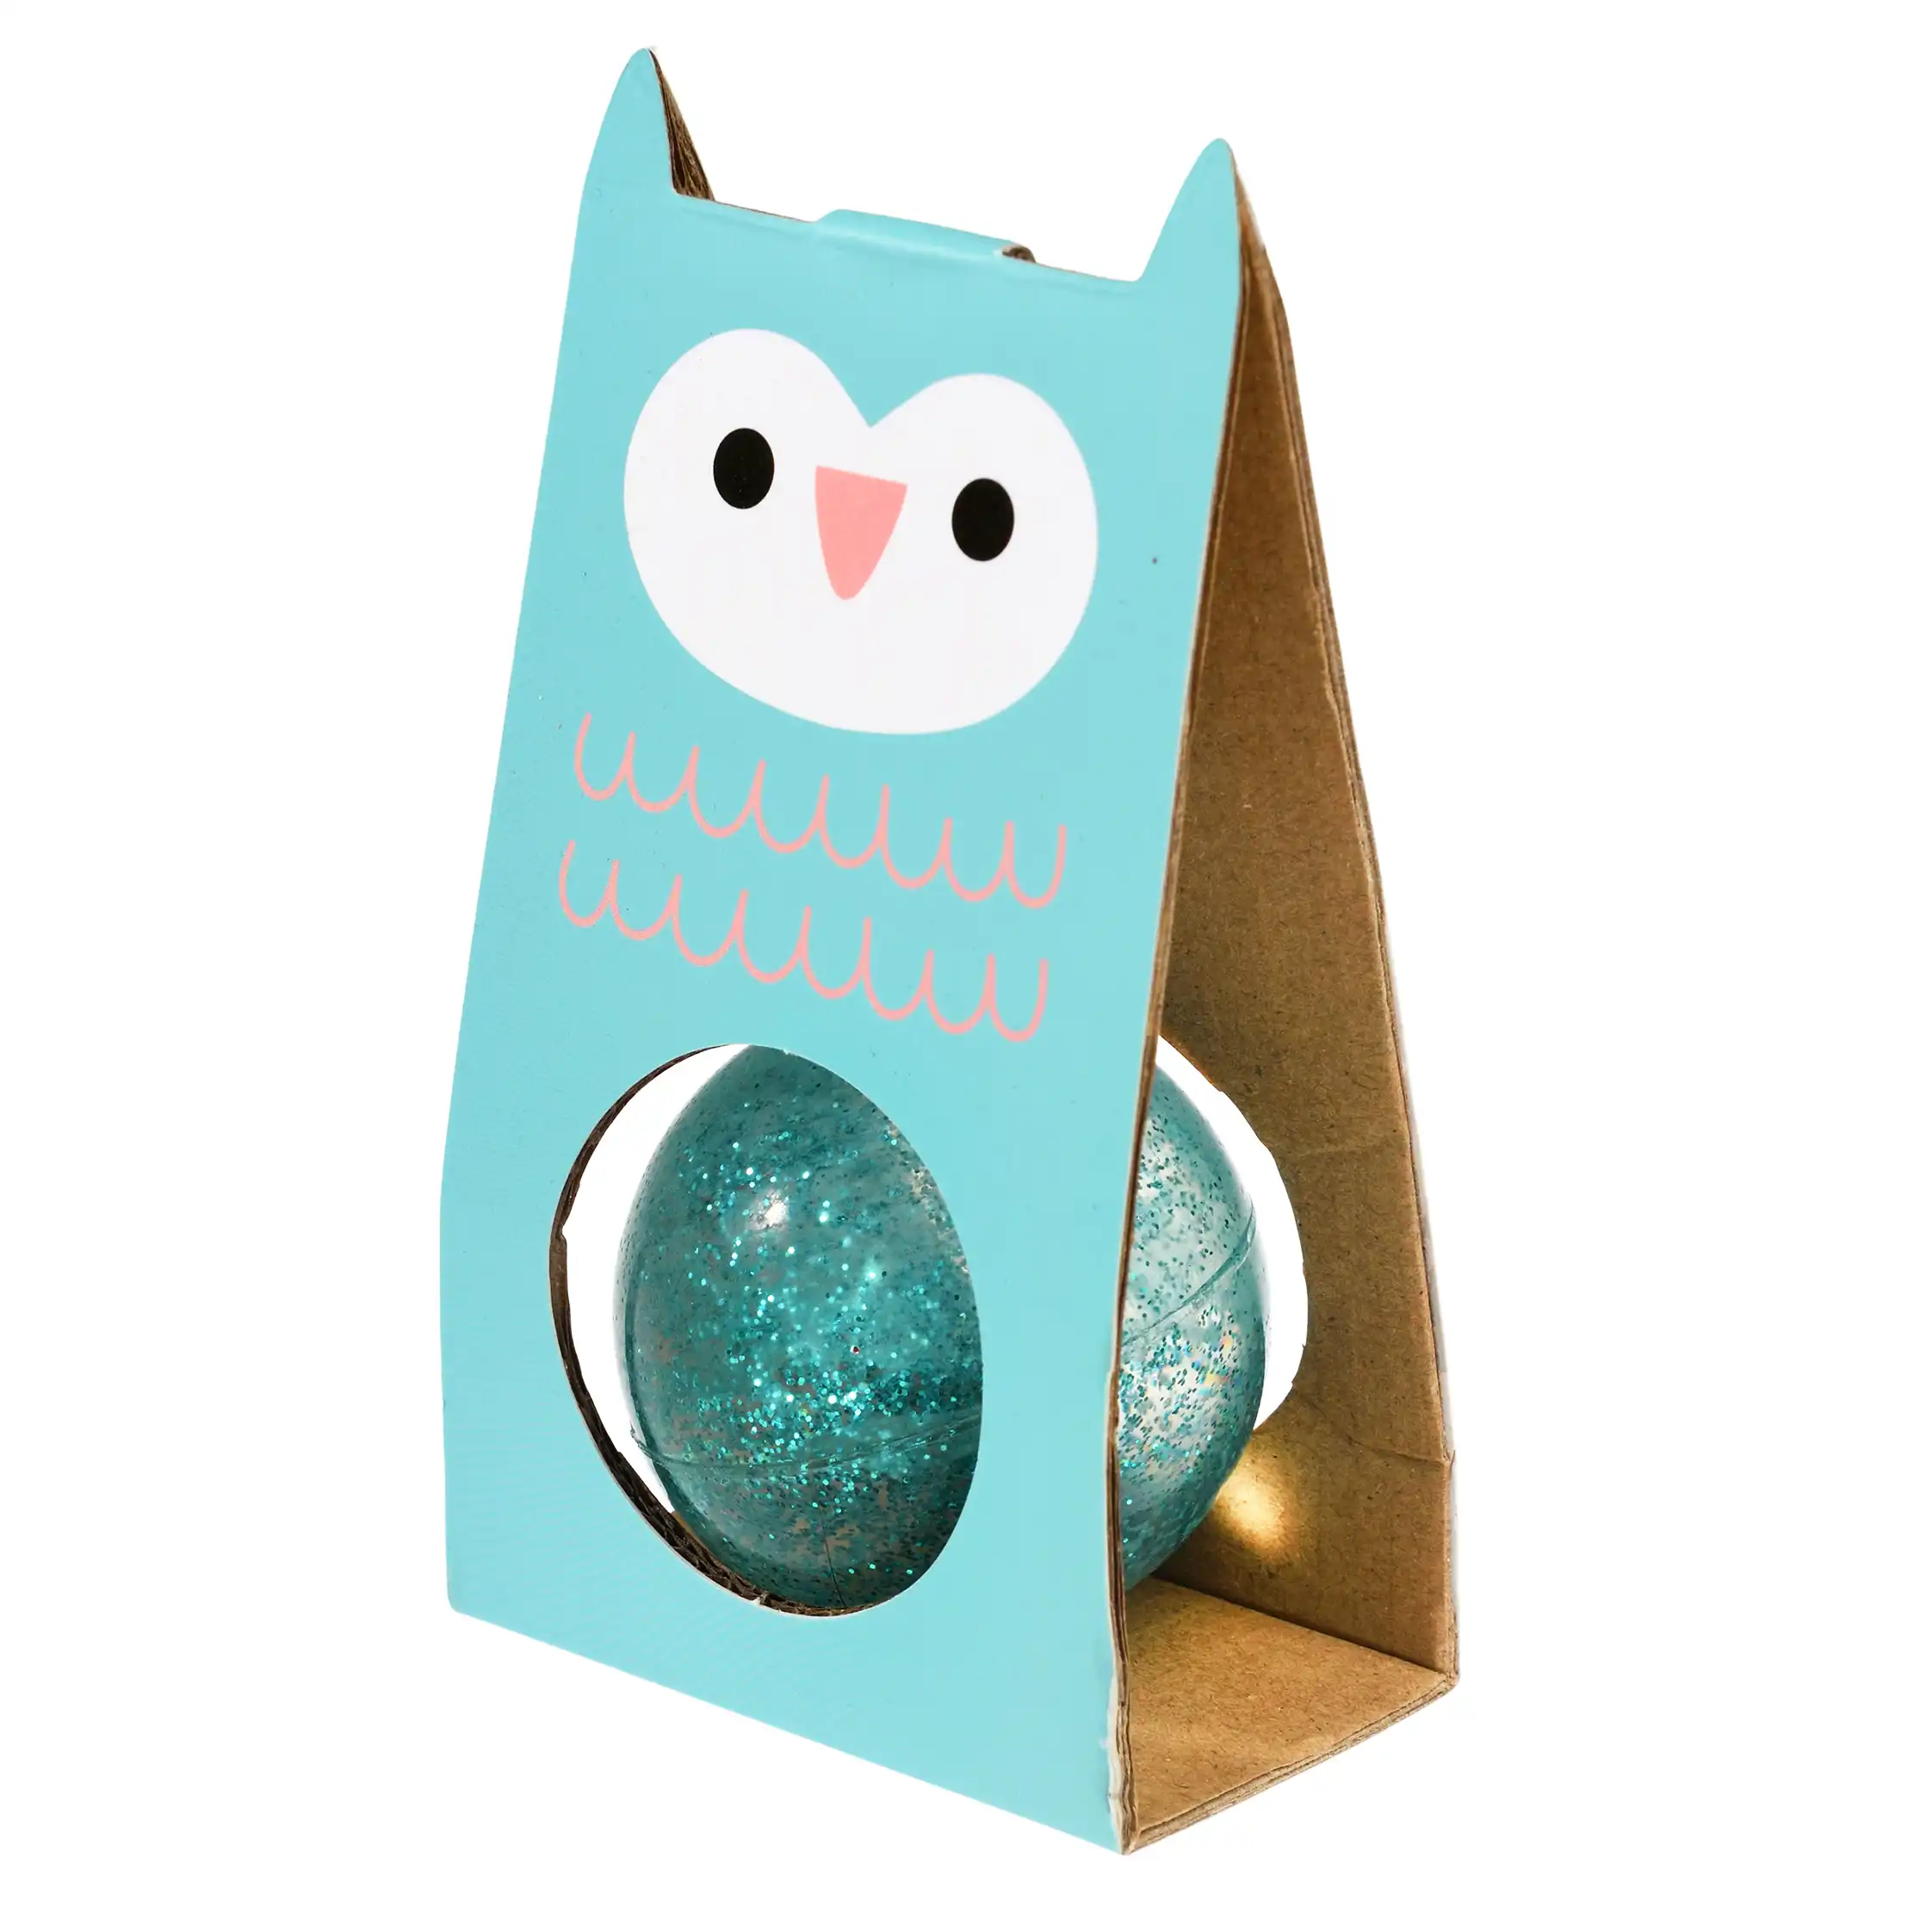 glitter bouncy ball - blue owl